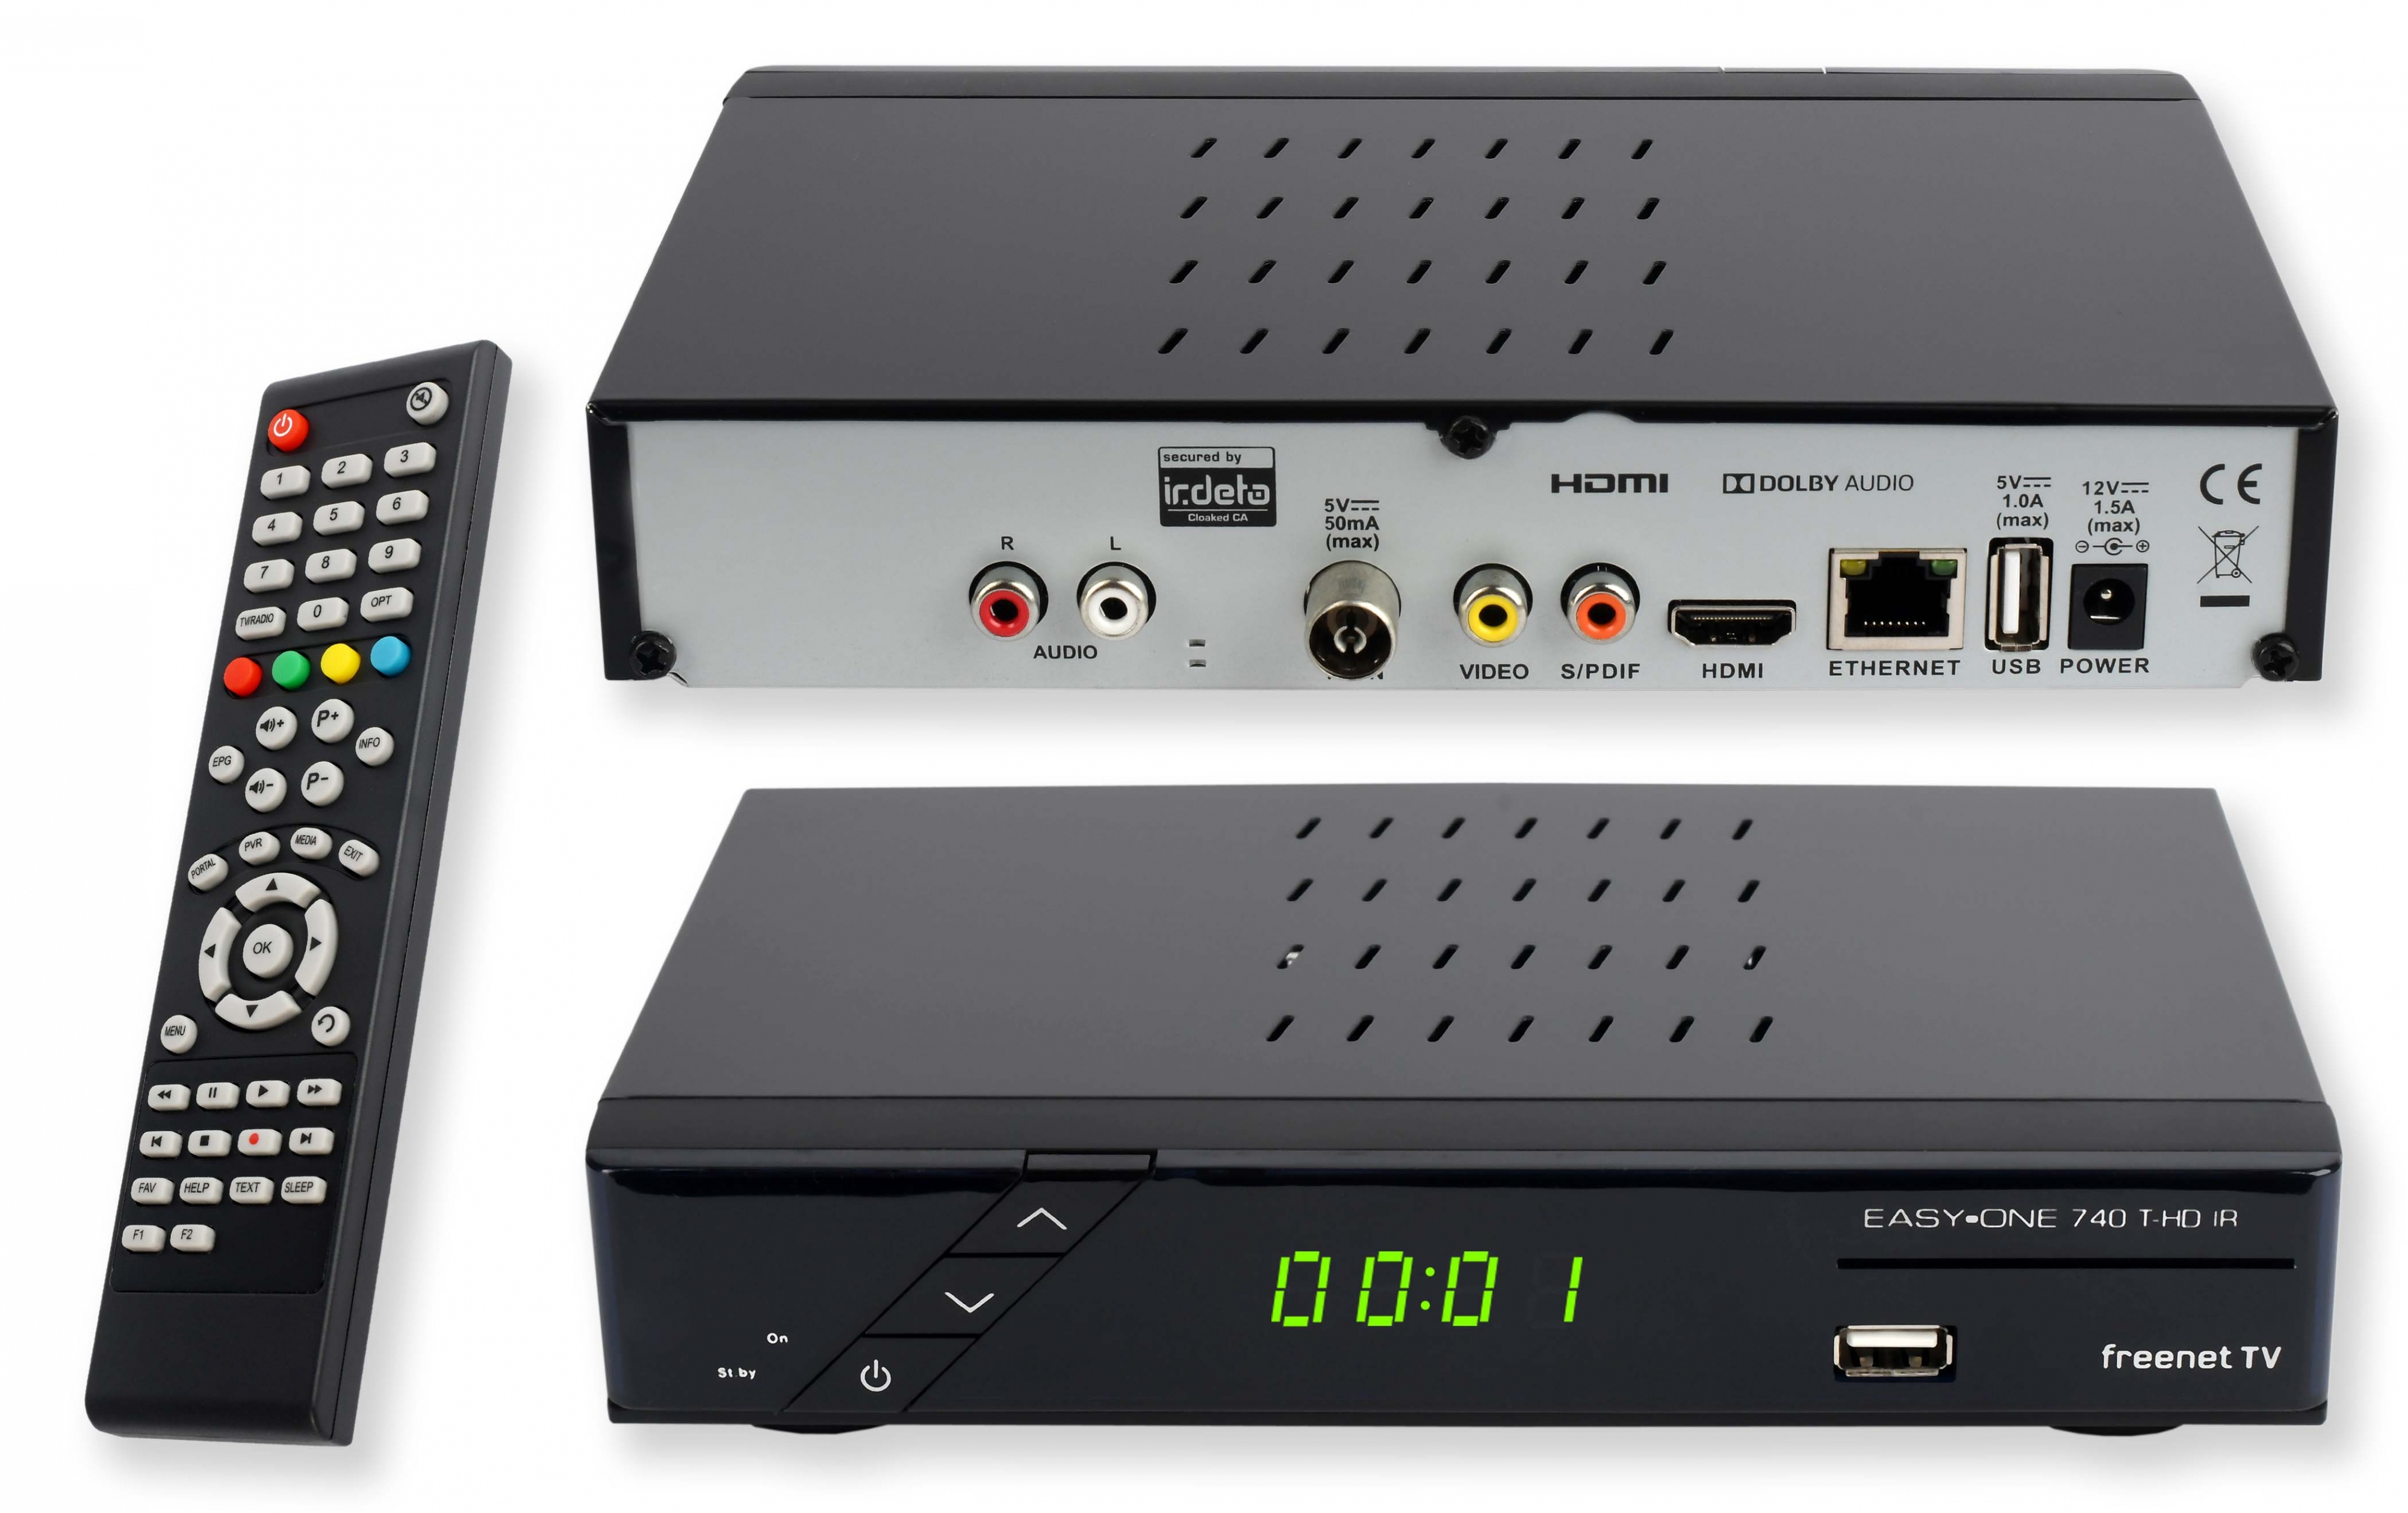 SET-ONE 740 HD Home Bundel (H.264), DVB-T2 (H.265), PVR-Funktion, DVB-T-Receiver DVB-T2 schwarz) DVB-T, (HDTV